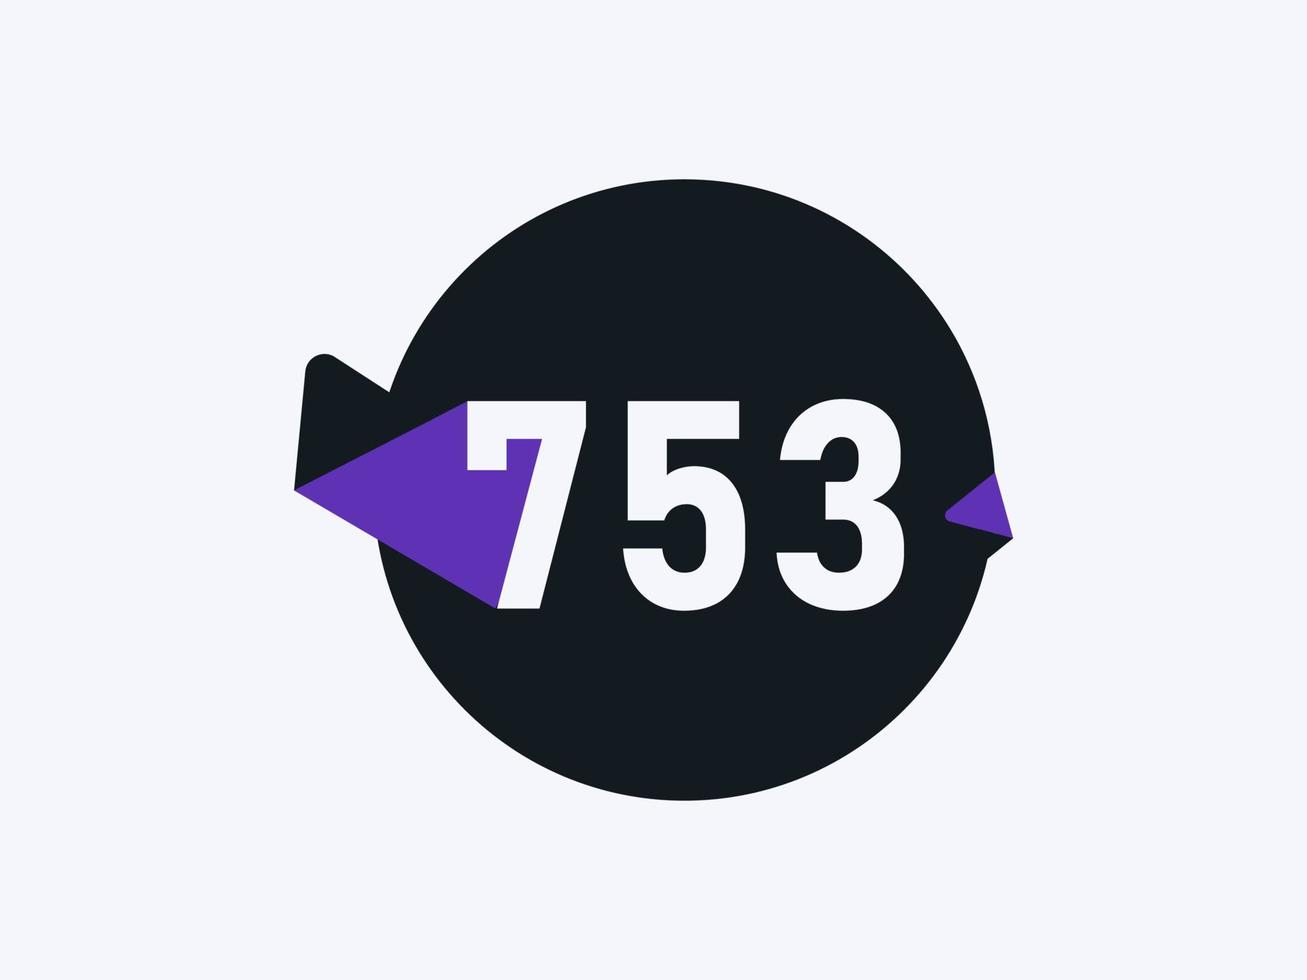 753 Number logo icon design vector image. Number logo icon design vector image